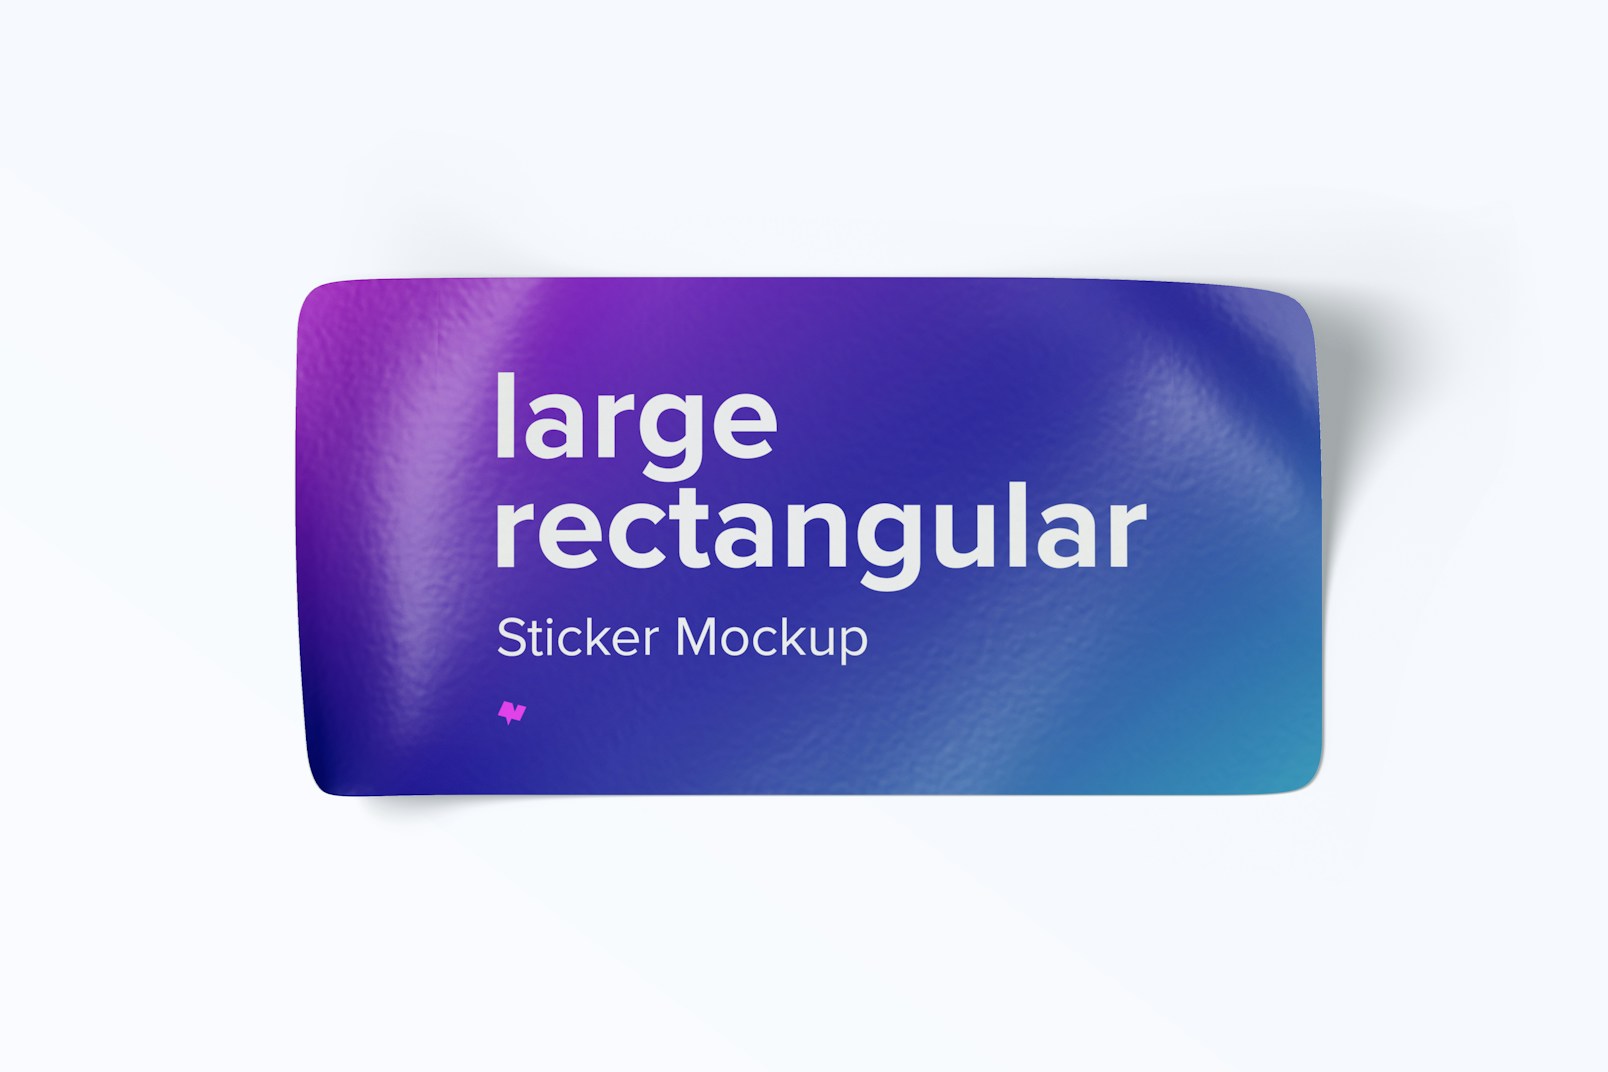 Large Rectangular Sticker Mockup, Top View